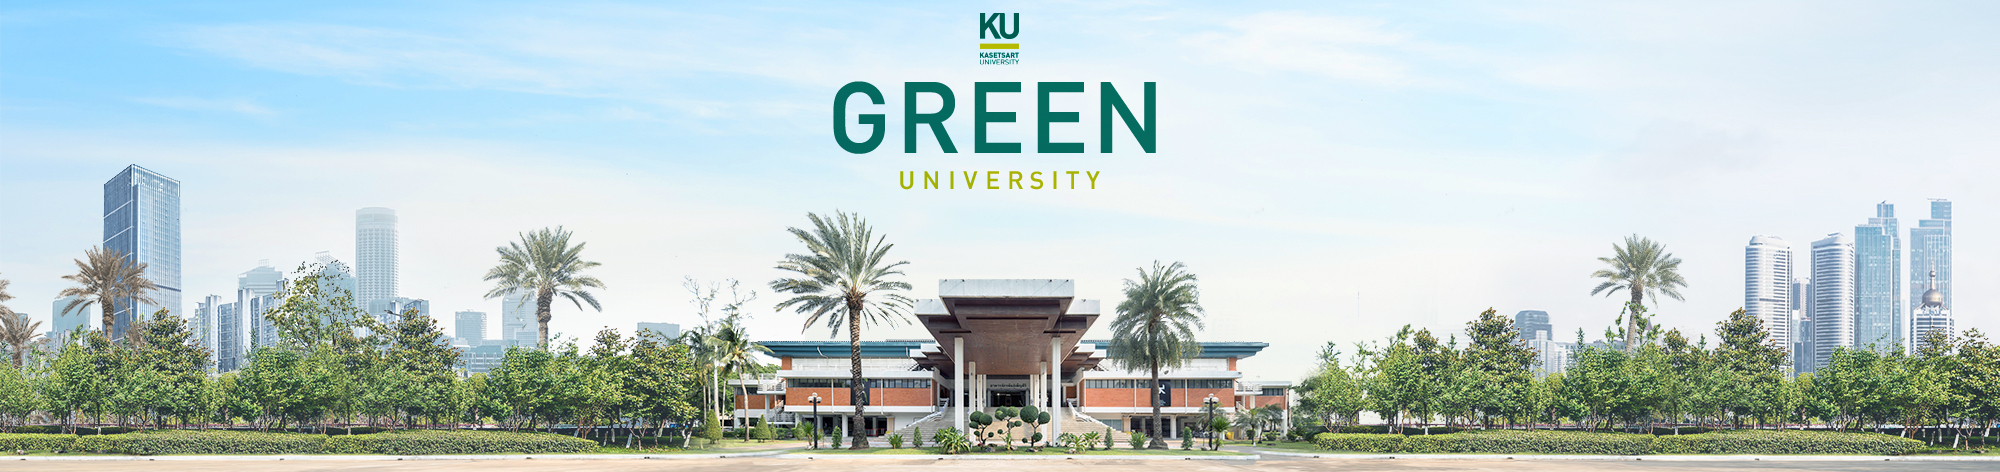 green university